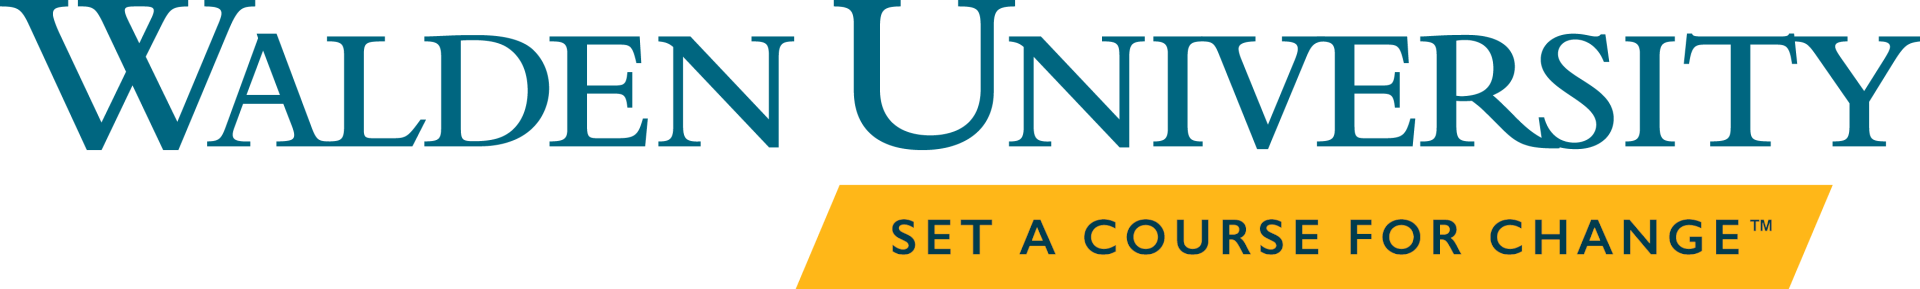 logo of walden university brand